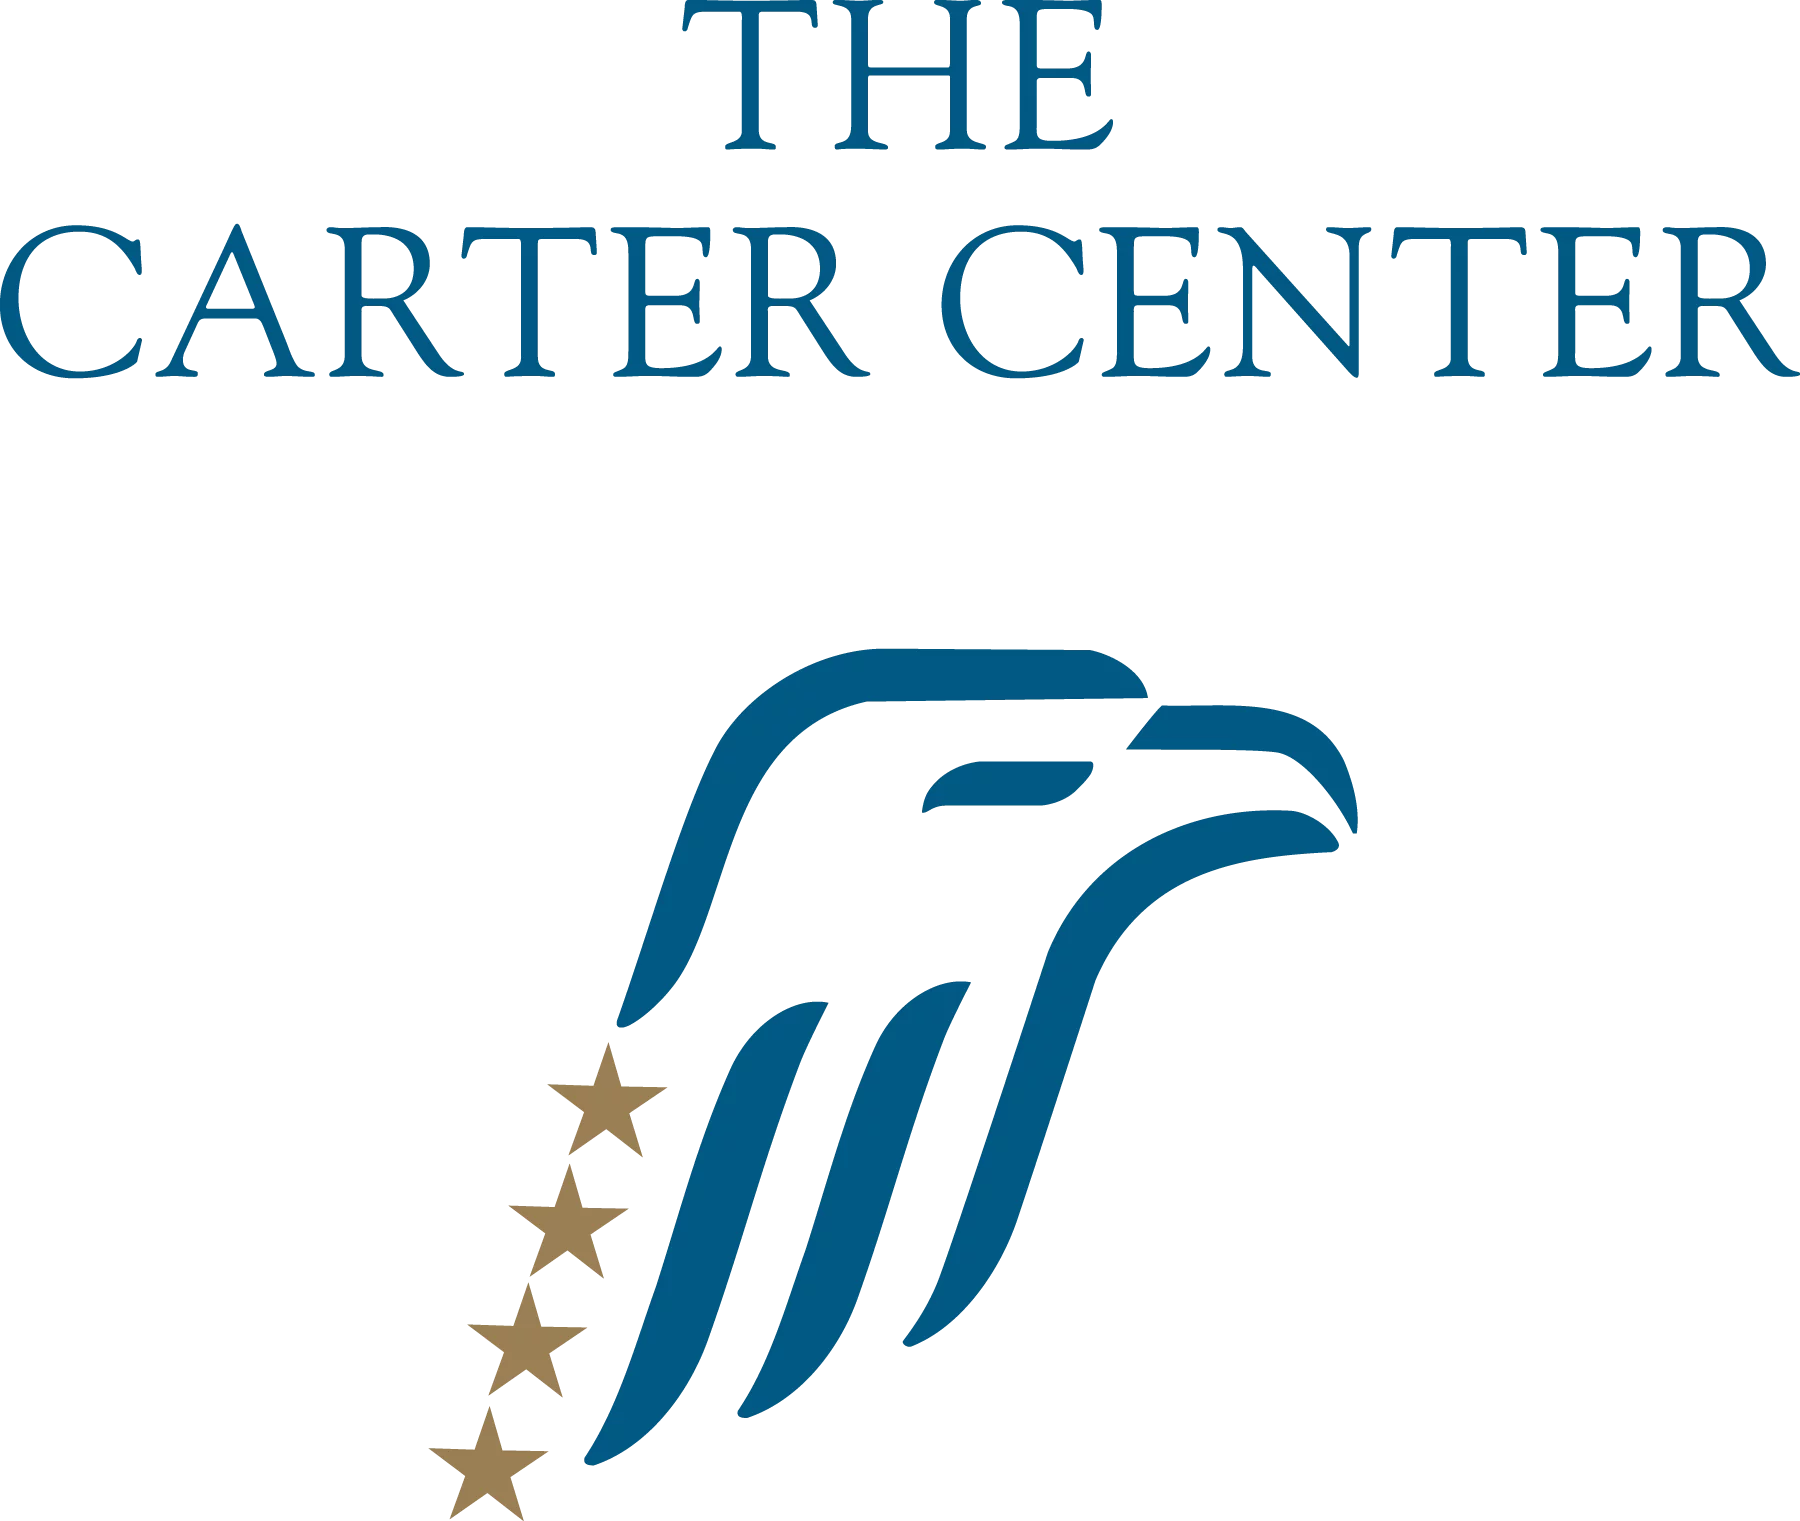 Le Centre Carter recrute un chargé des ressource humaines, N’Djaména, Tchad